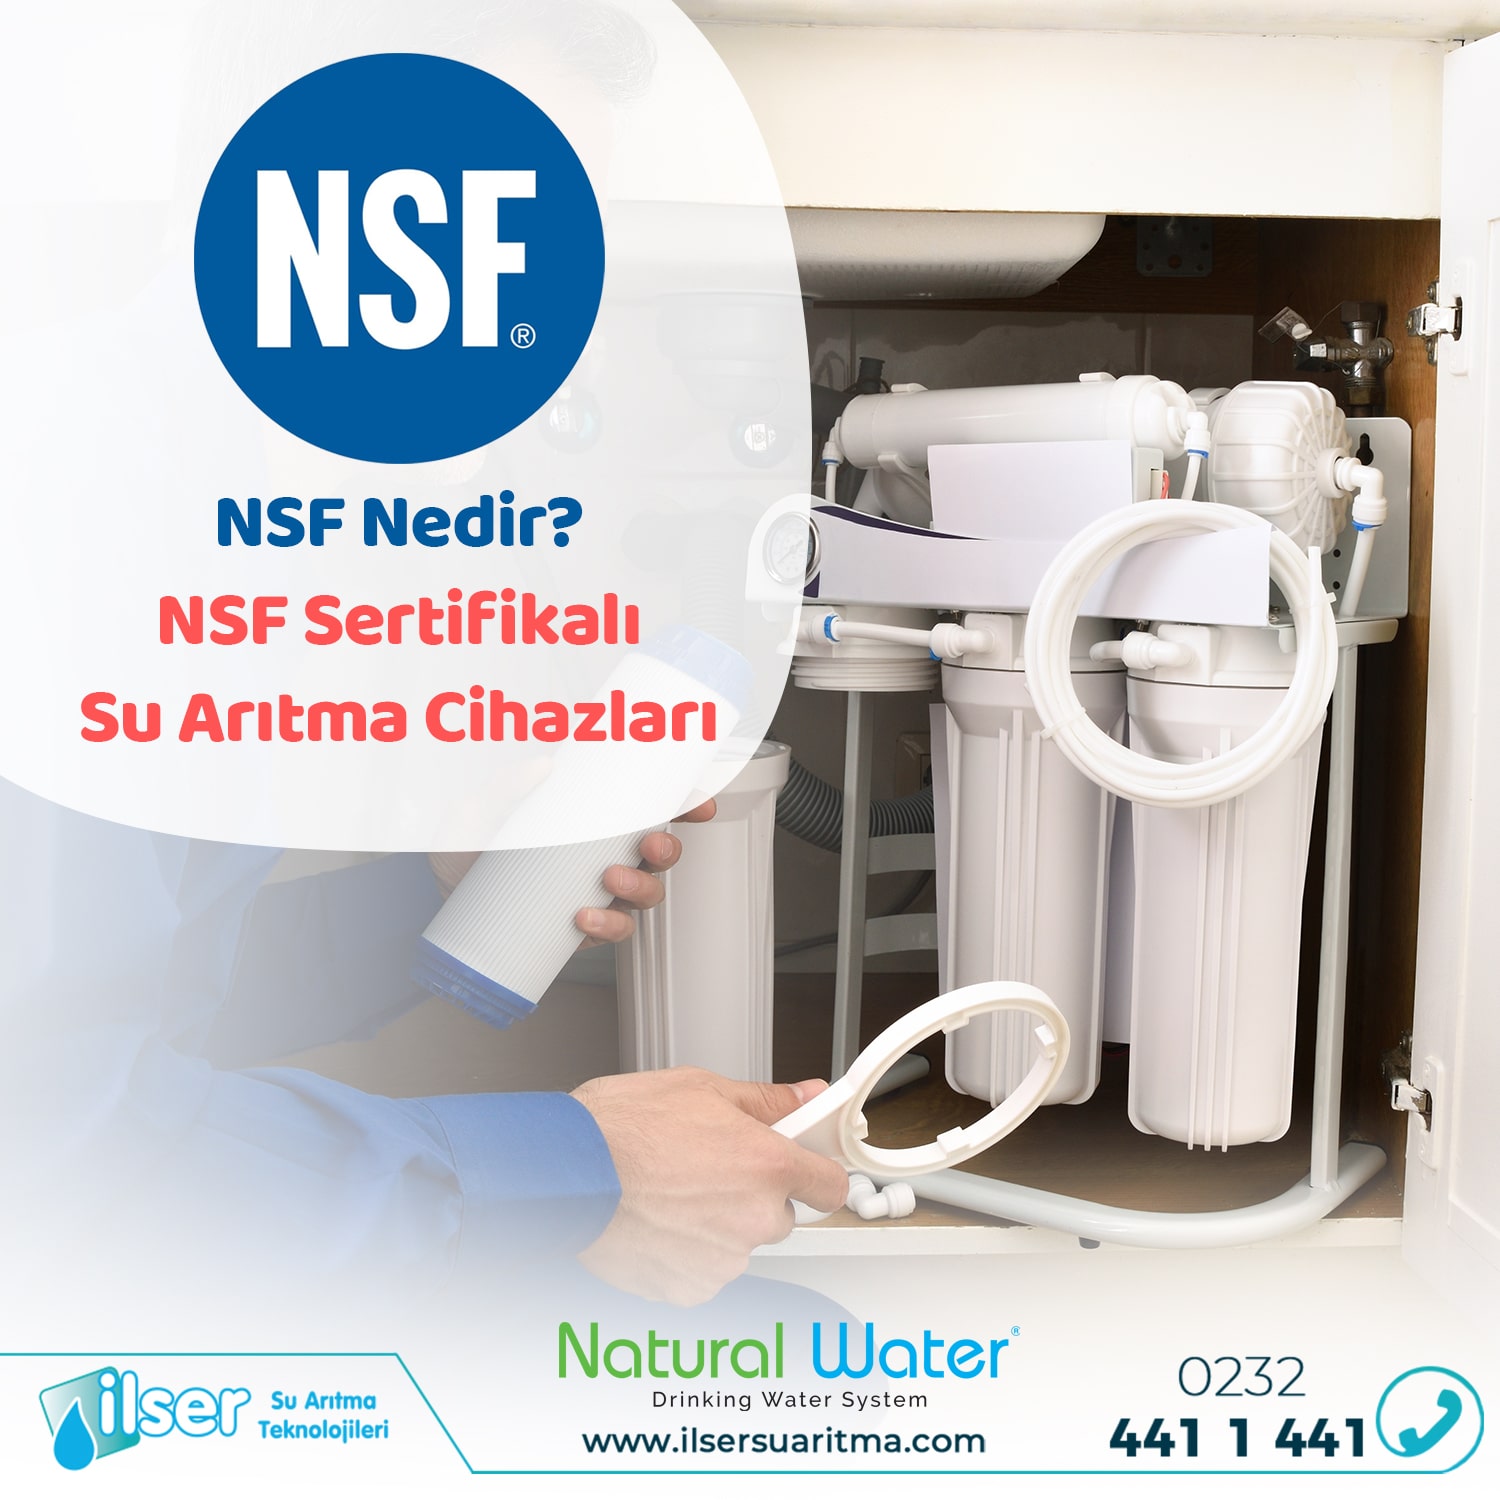 NSF Nedir? NSF Sertifikalı Su Arıtma Cihazları